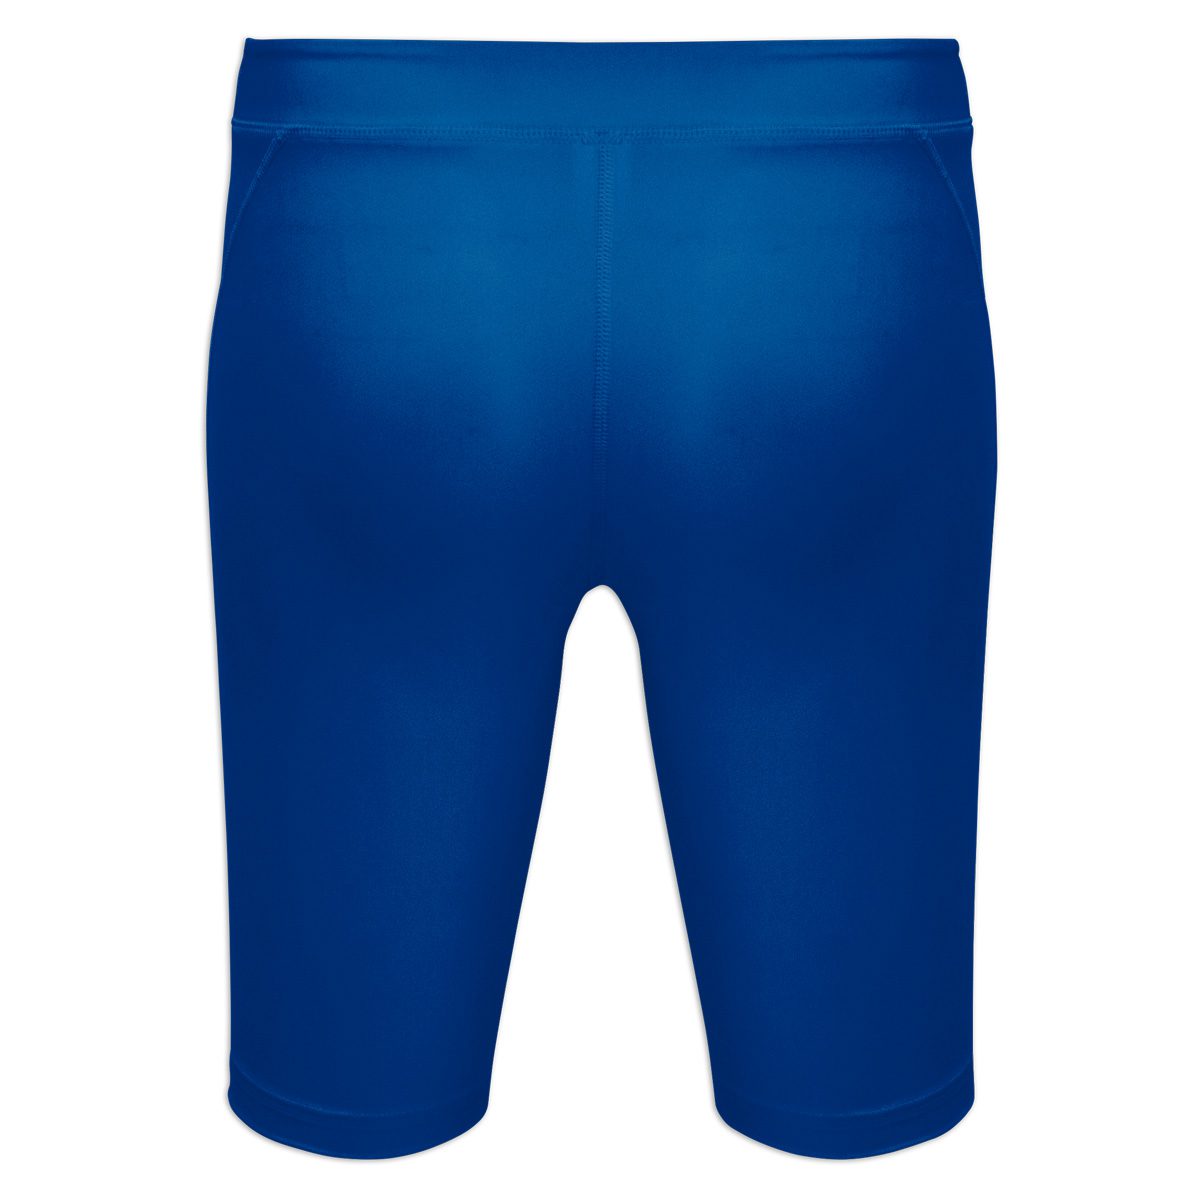 Women's Compression Shorts - Royal Blue - Blackchrome